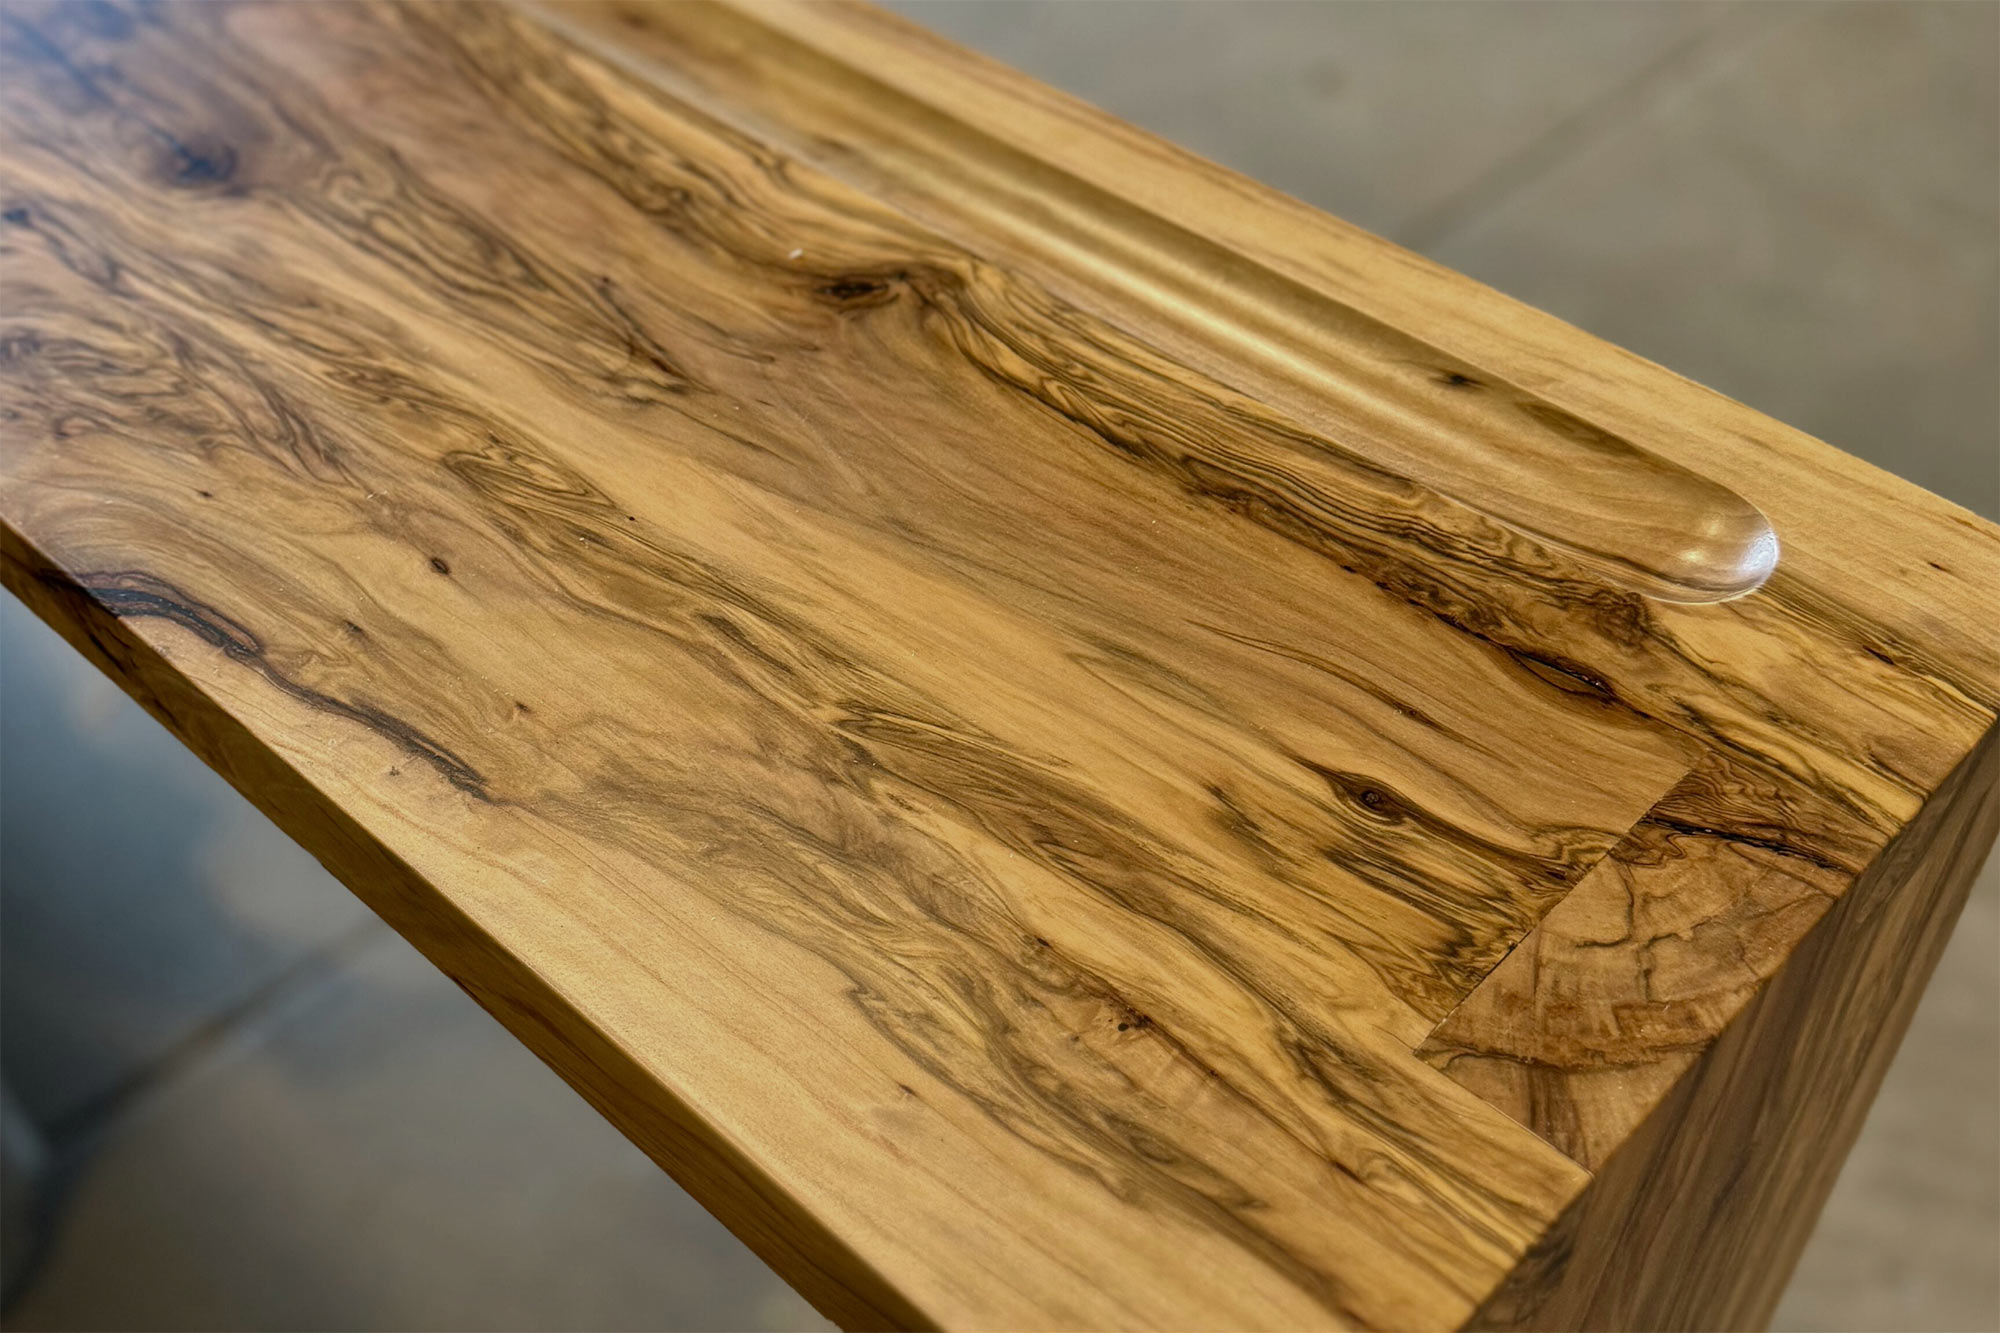 Alabama Sawyer creates beautiful custom wood furniture from reclaimed urban timber.